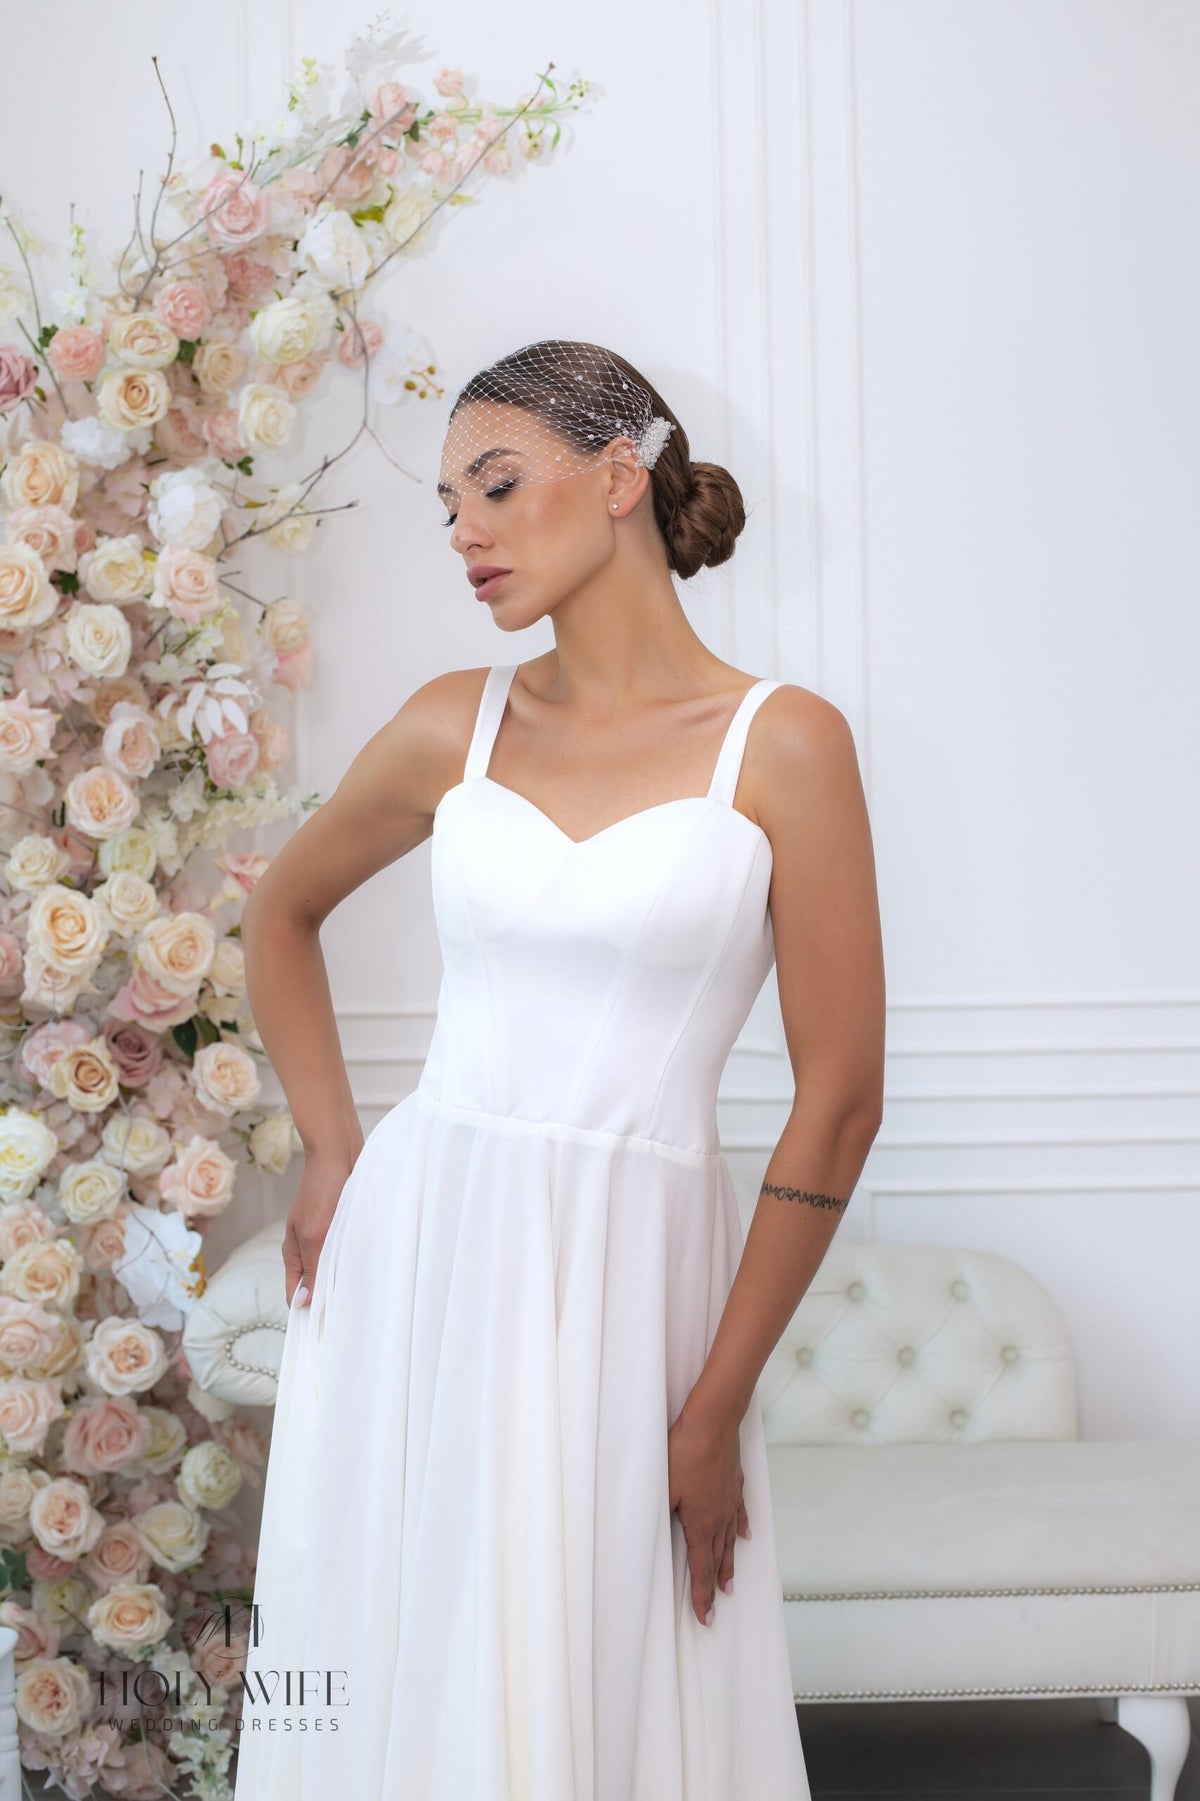 Classic Simple Sleeveless Aline Wedding Dress Thick Strap Bridal Gown Chiffon Train Sweetheart Neckline Minimalist Design Corset Back